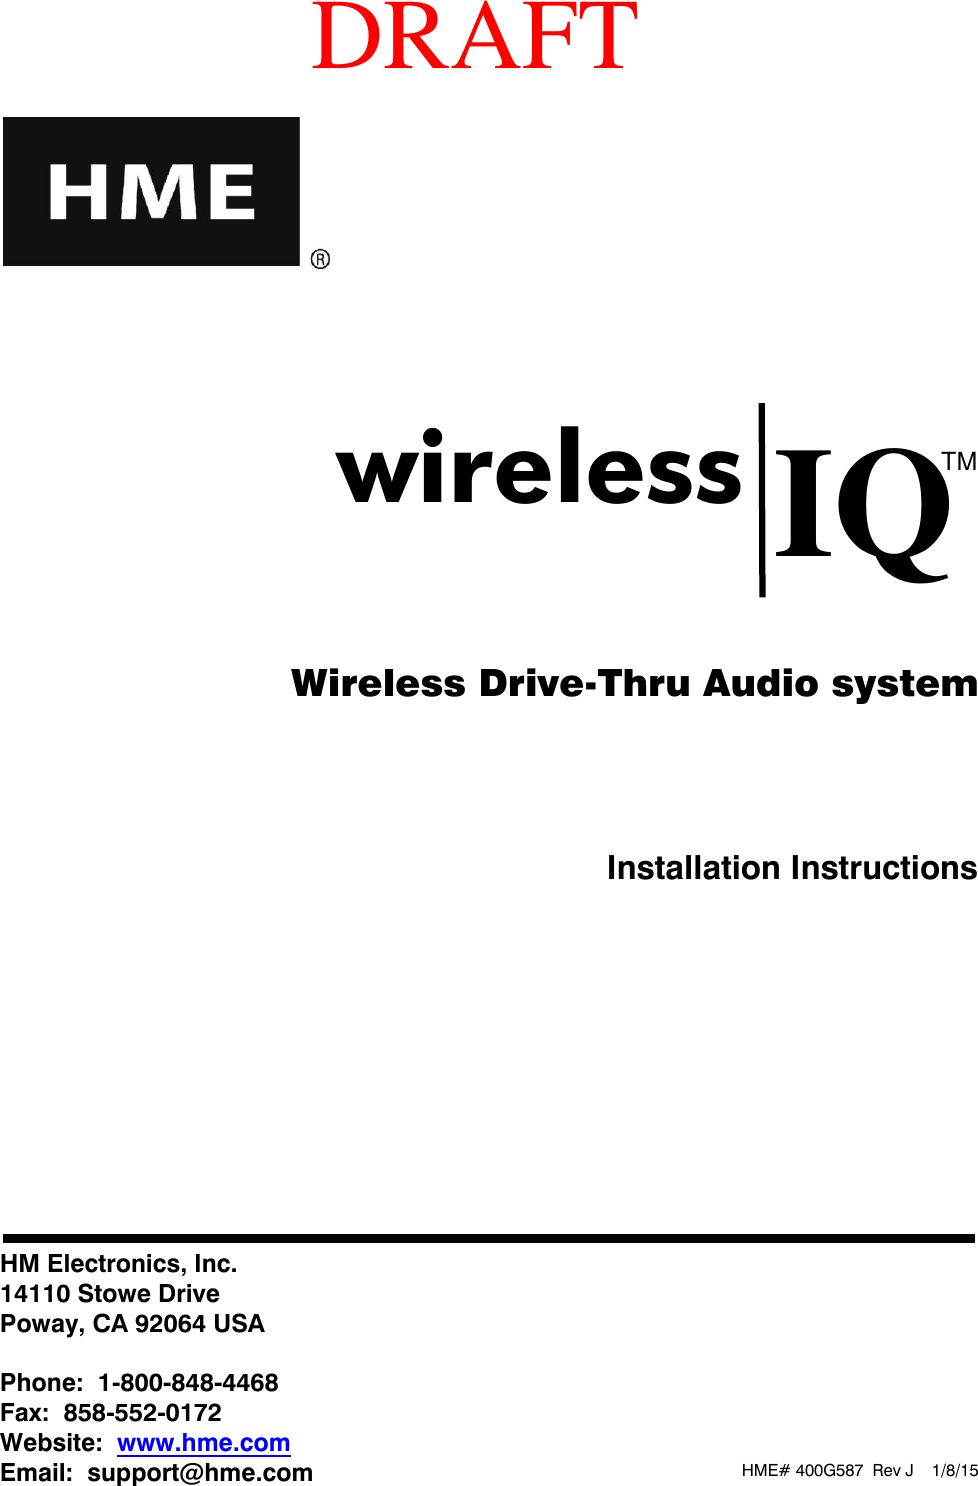    Wireless Drive-Thru Audio system Installation Instructions HME# 400G587  Rev J    1/8/15 HM Electronics, Inc. 14110 Stowe Drive Poway, CA 92064 USA  Phone:  1-800-848-4468 Fax:  858-552-0172 Website:  www.hme.com Email:  support@hme.com wireless IQ TM DRAFT 